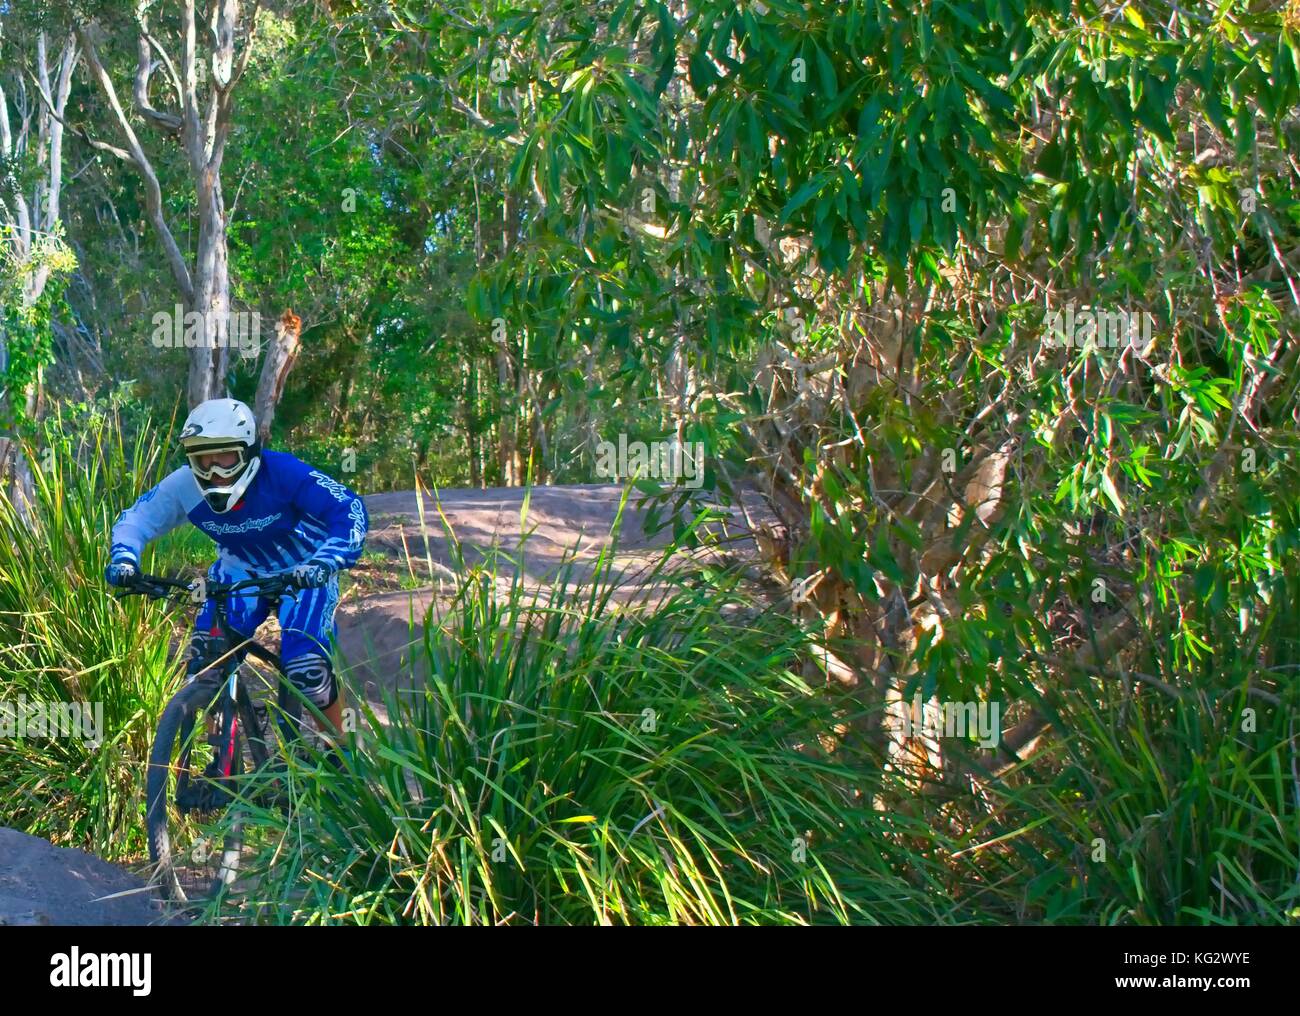 Young Mountain biker riding through bush land Stock Photo